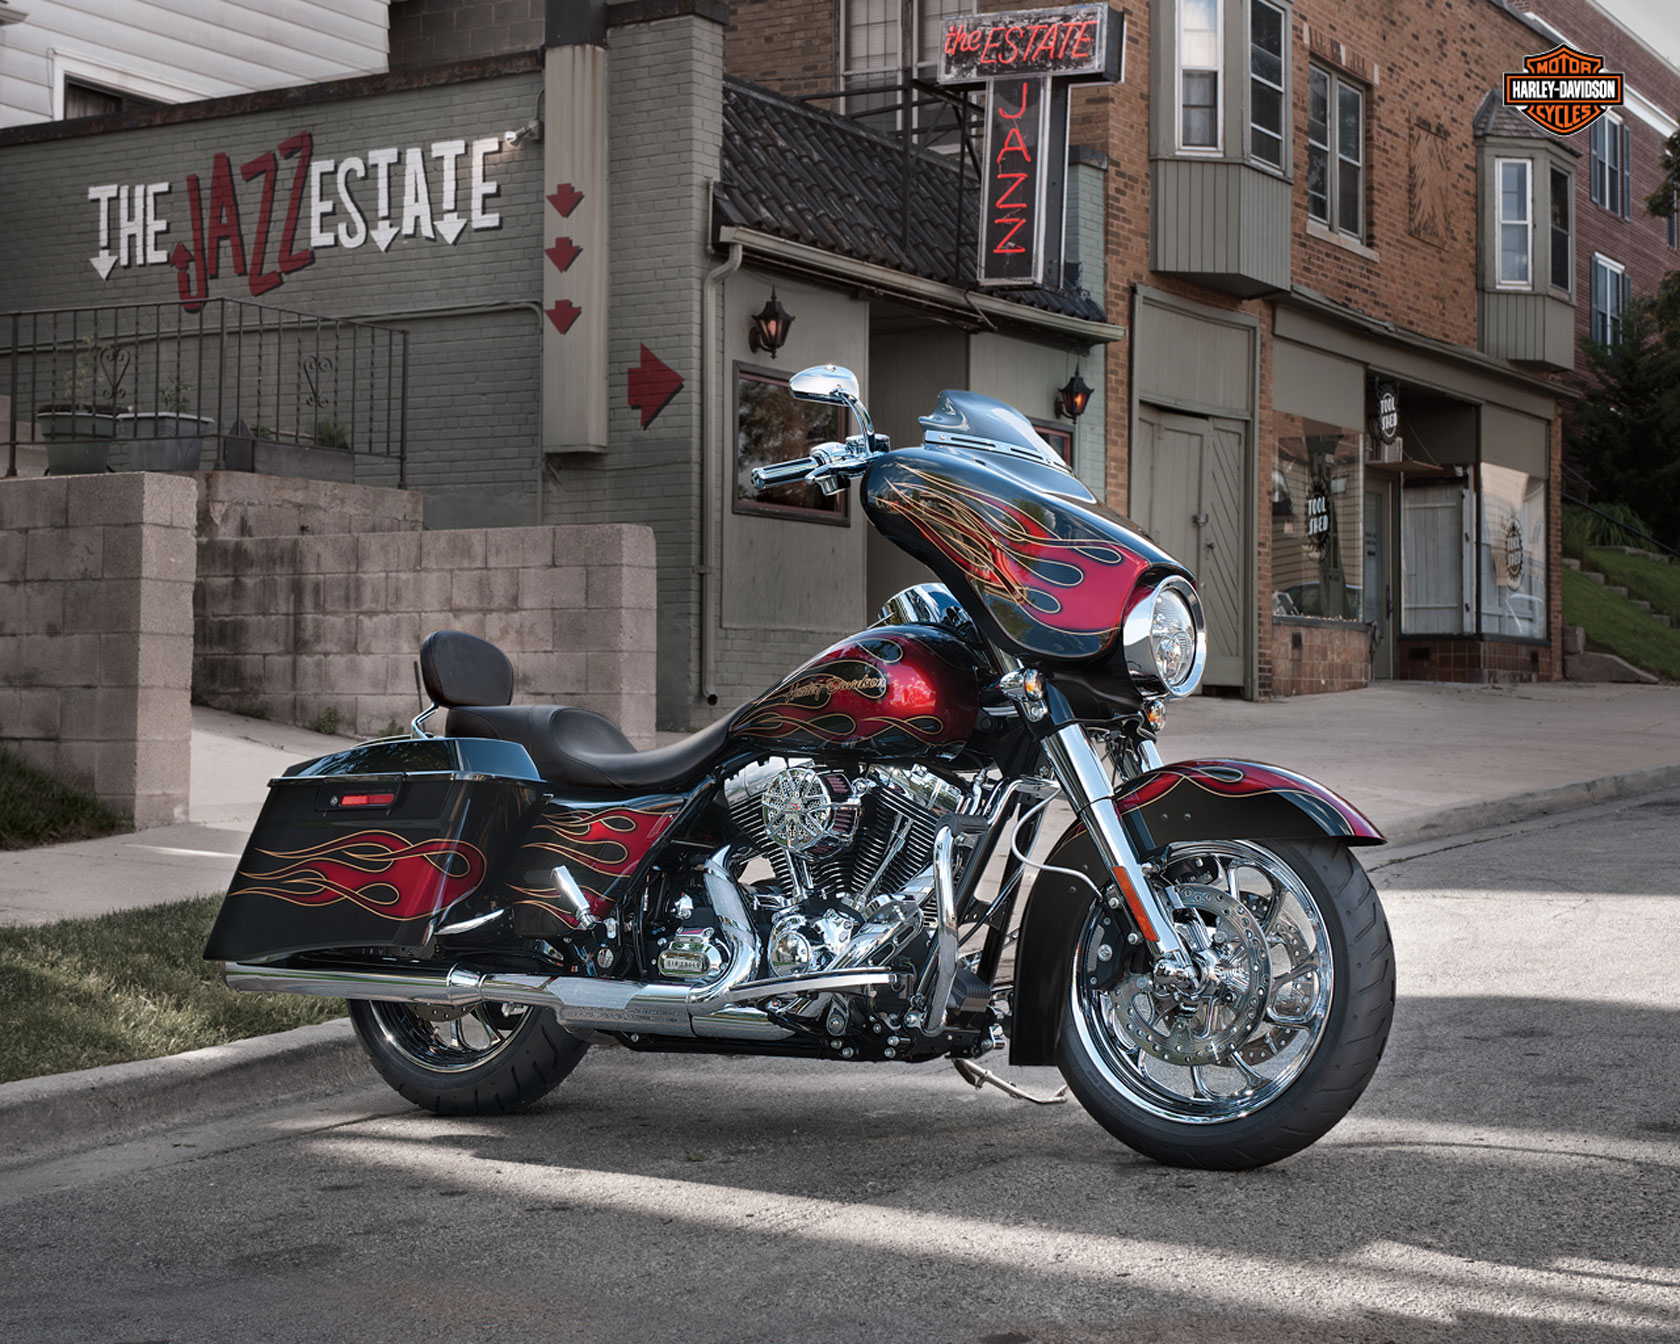 2013 Harley Davidson Flhx Street Glide Review